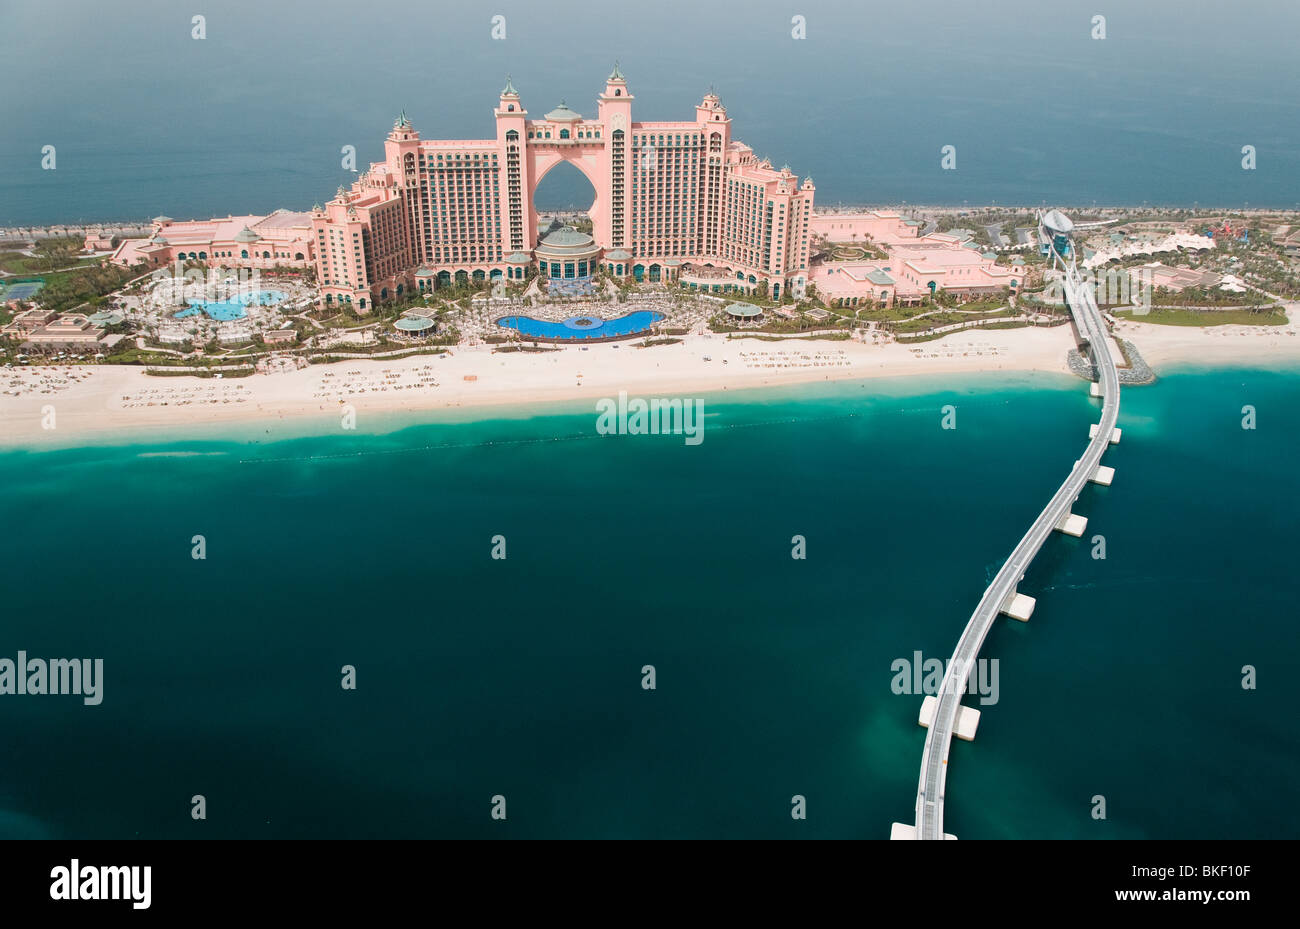 Aerial photograph of the Atlantis Hotel on the Palm in Dubai UAE Stock Photo